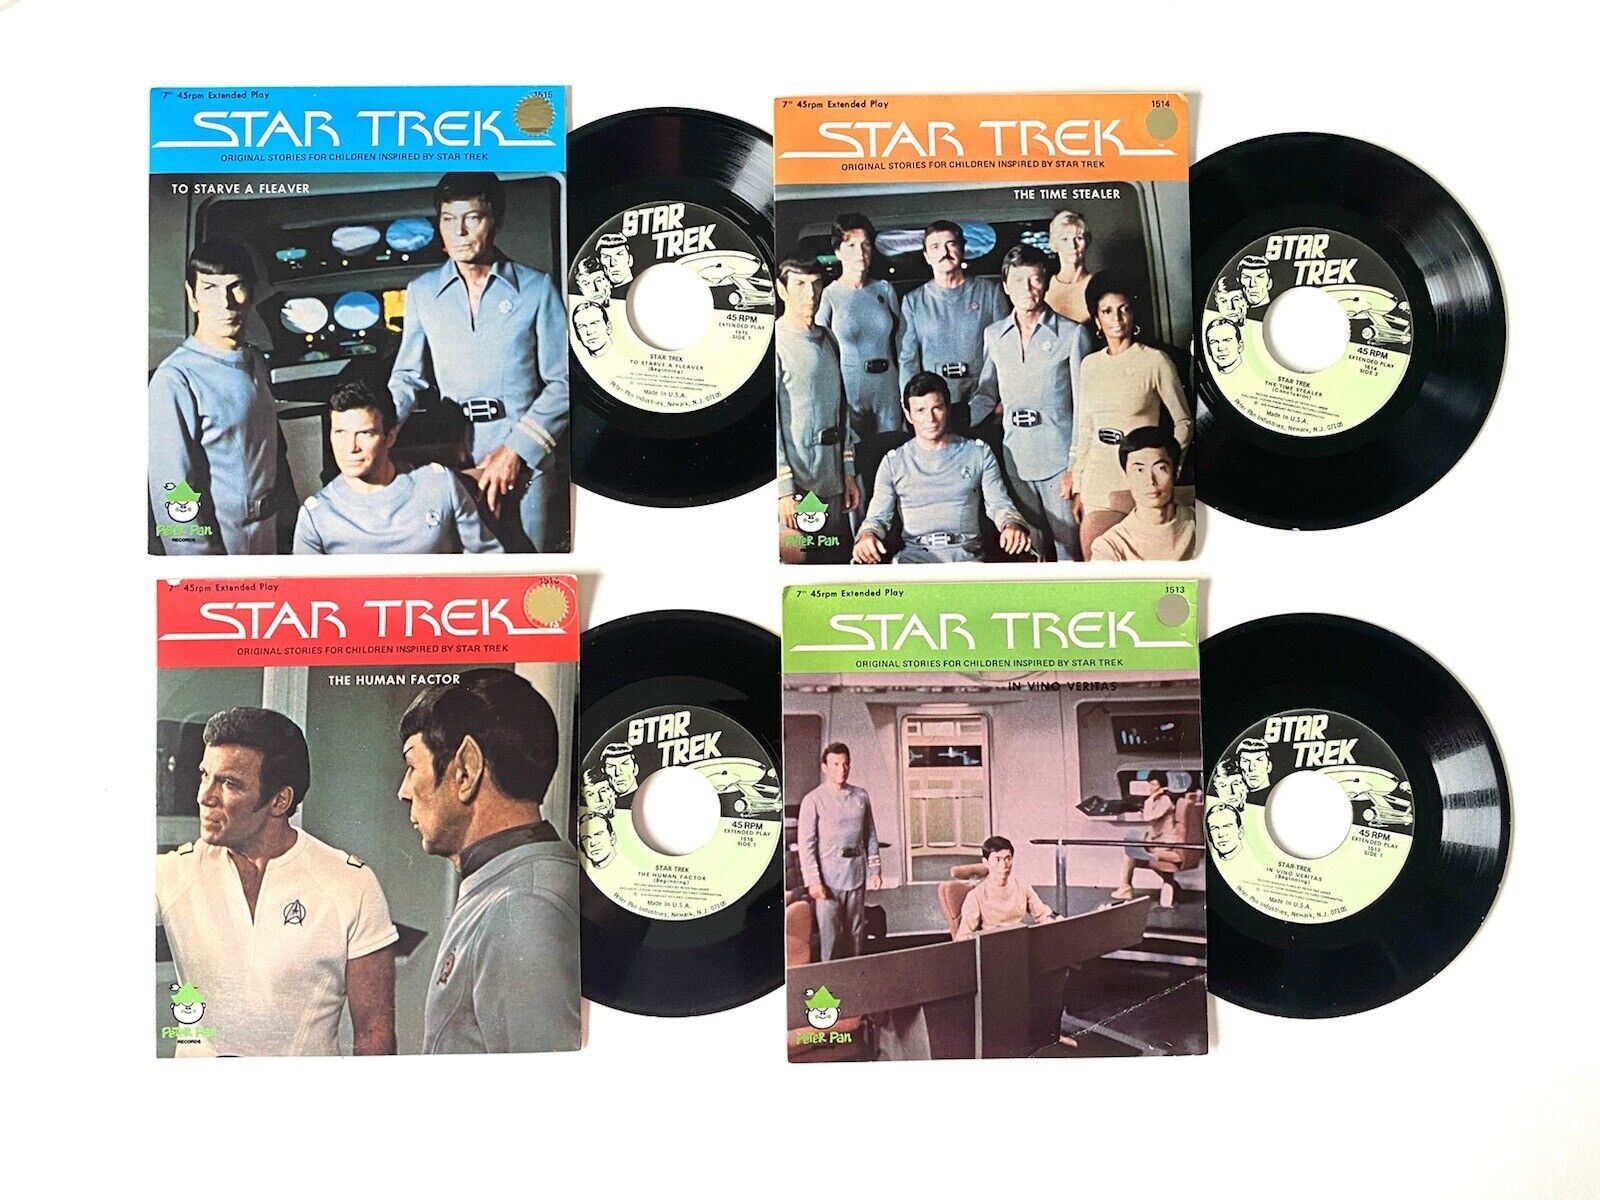 1979 Star Trek 45 RPM 7 Inch Vinyl Records - Complete Set of 4